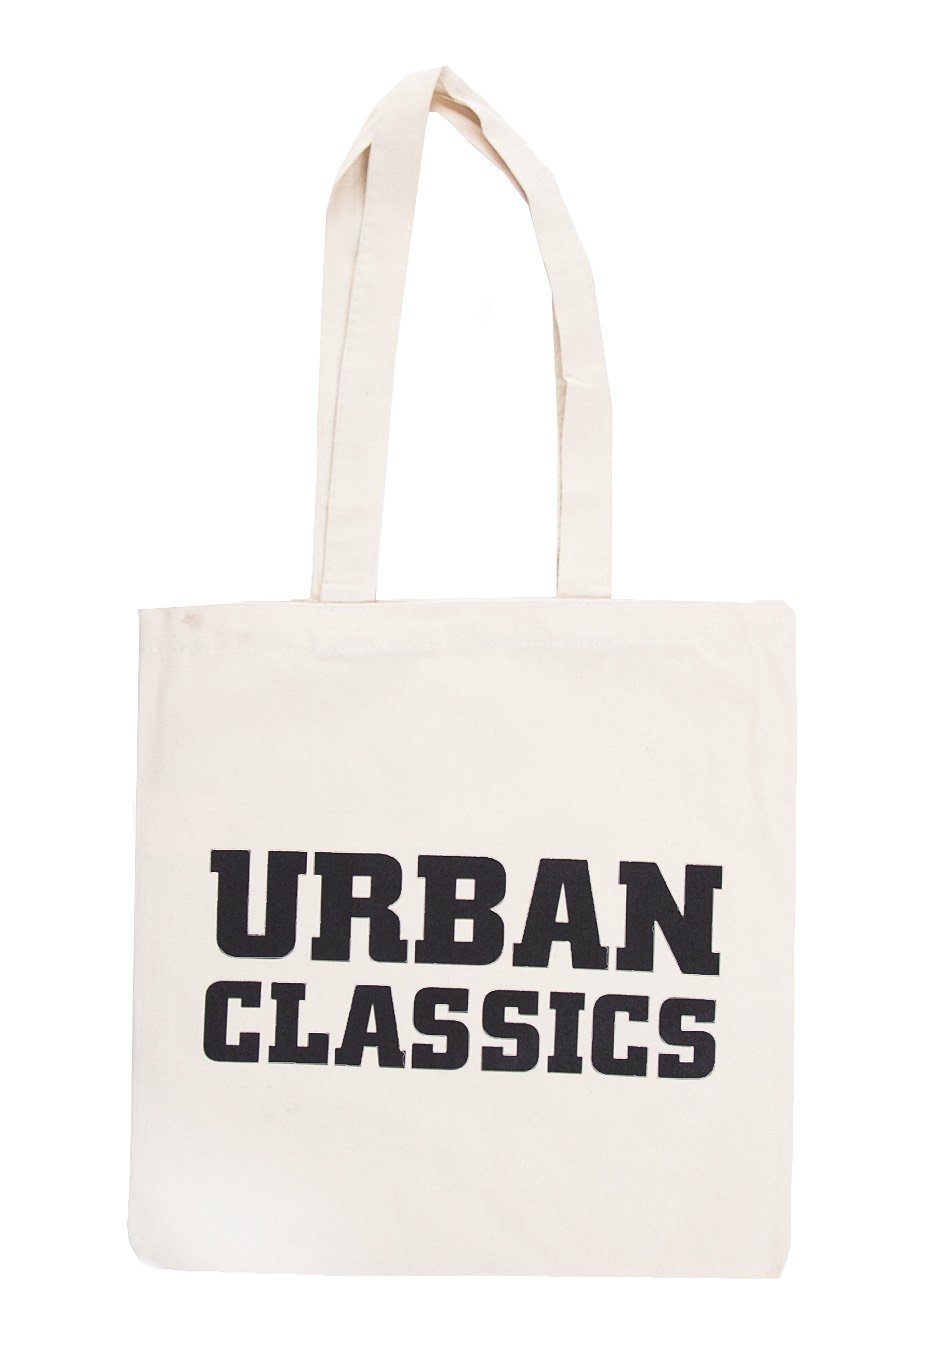 Urban Classics - Impericon x Urban Classics - Tote Bag